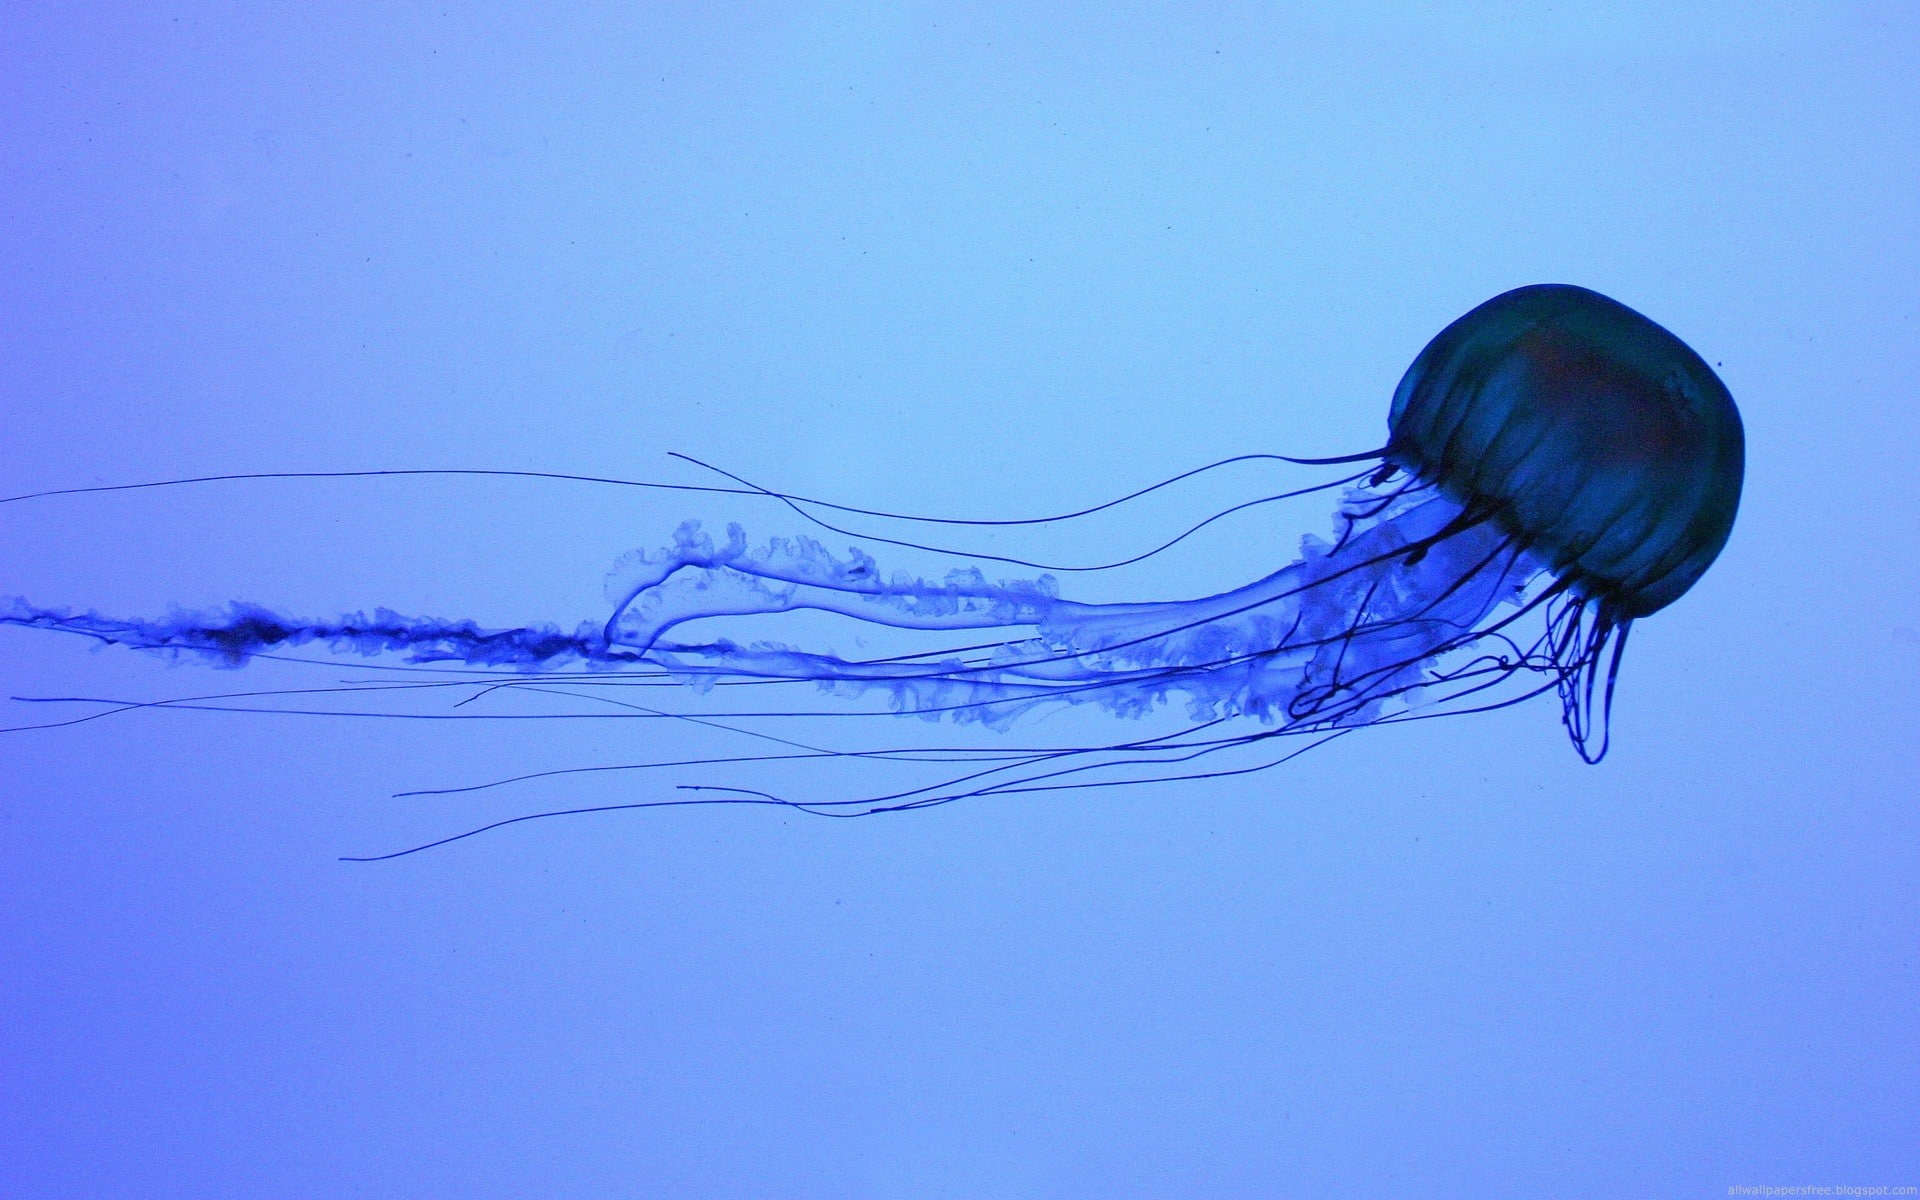 jellyfish, water, animals, Medusa, sea, animals in the wild